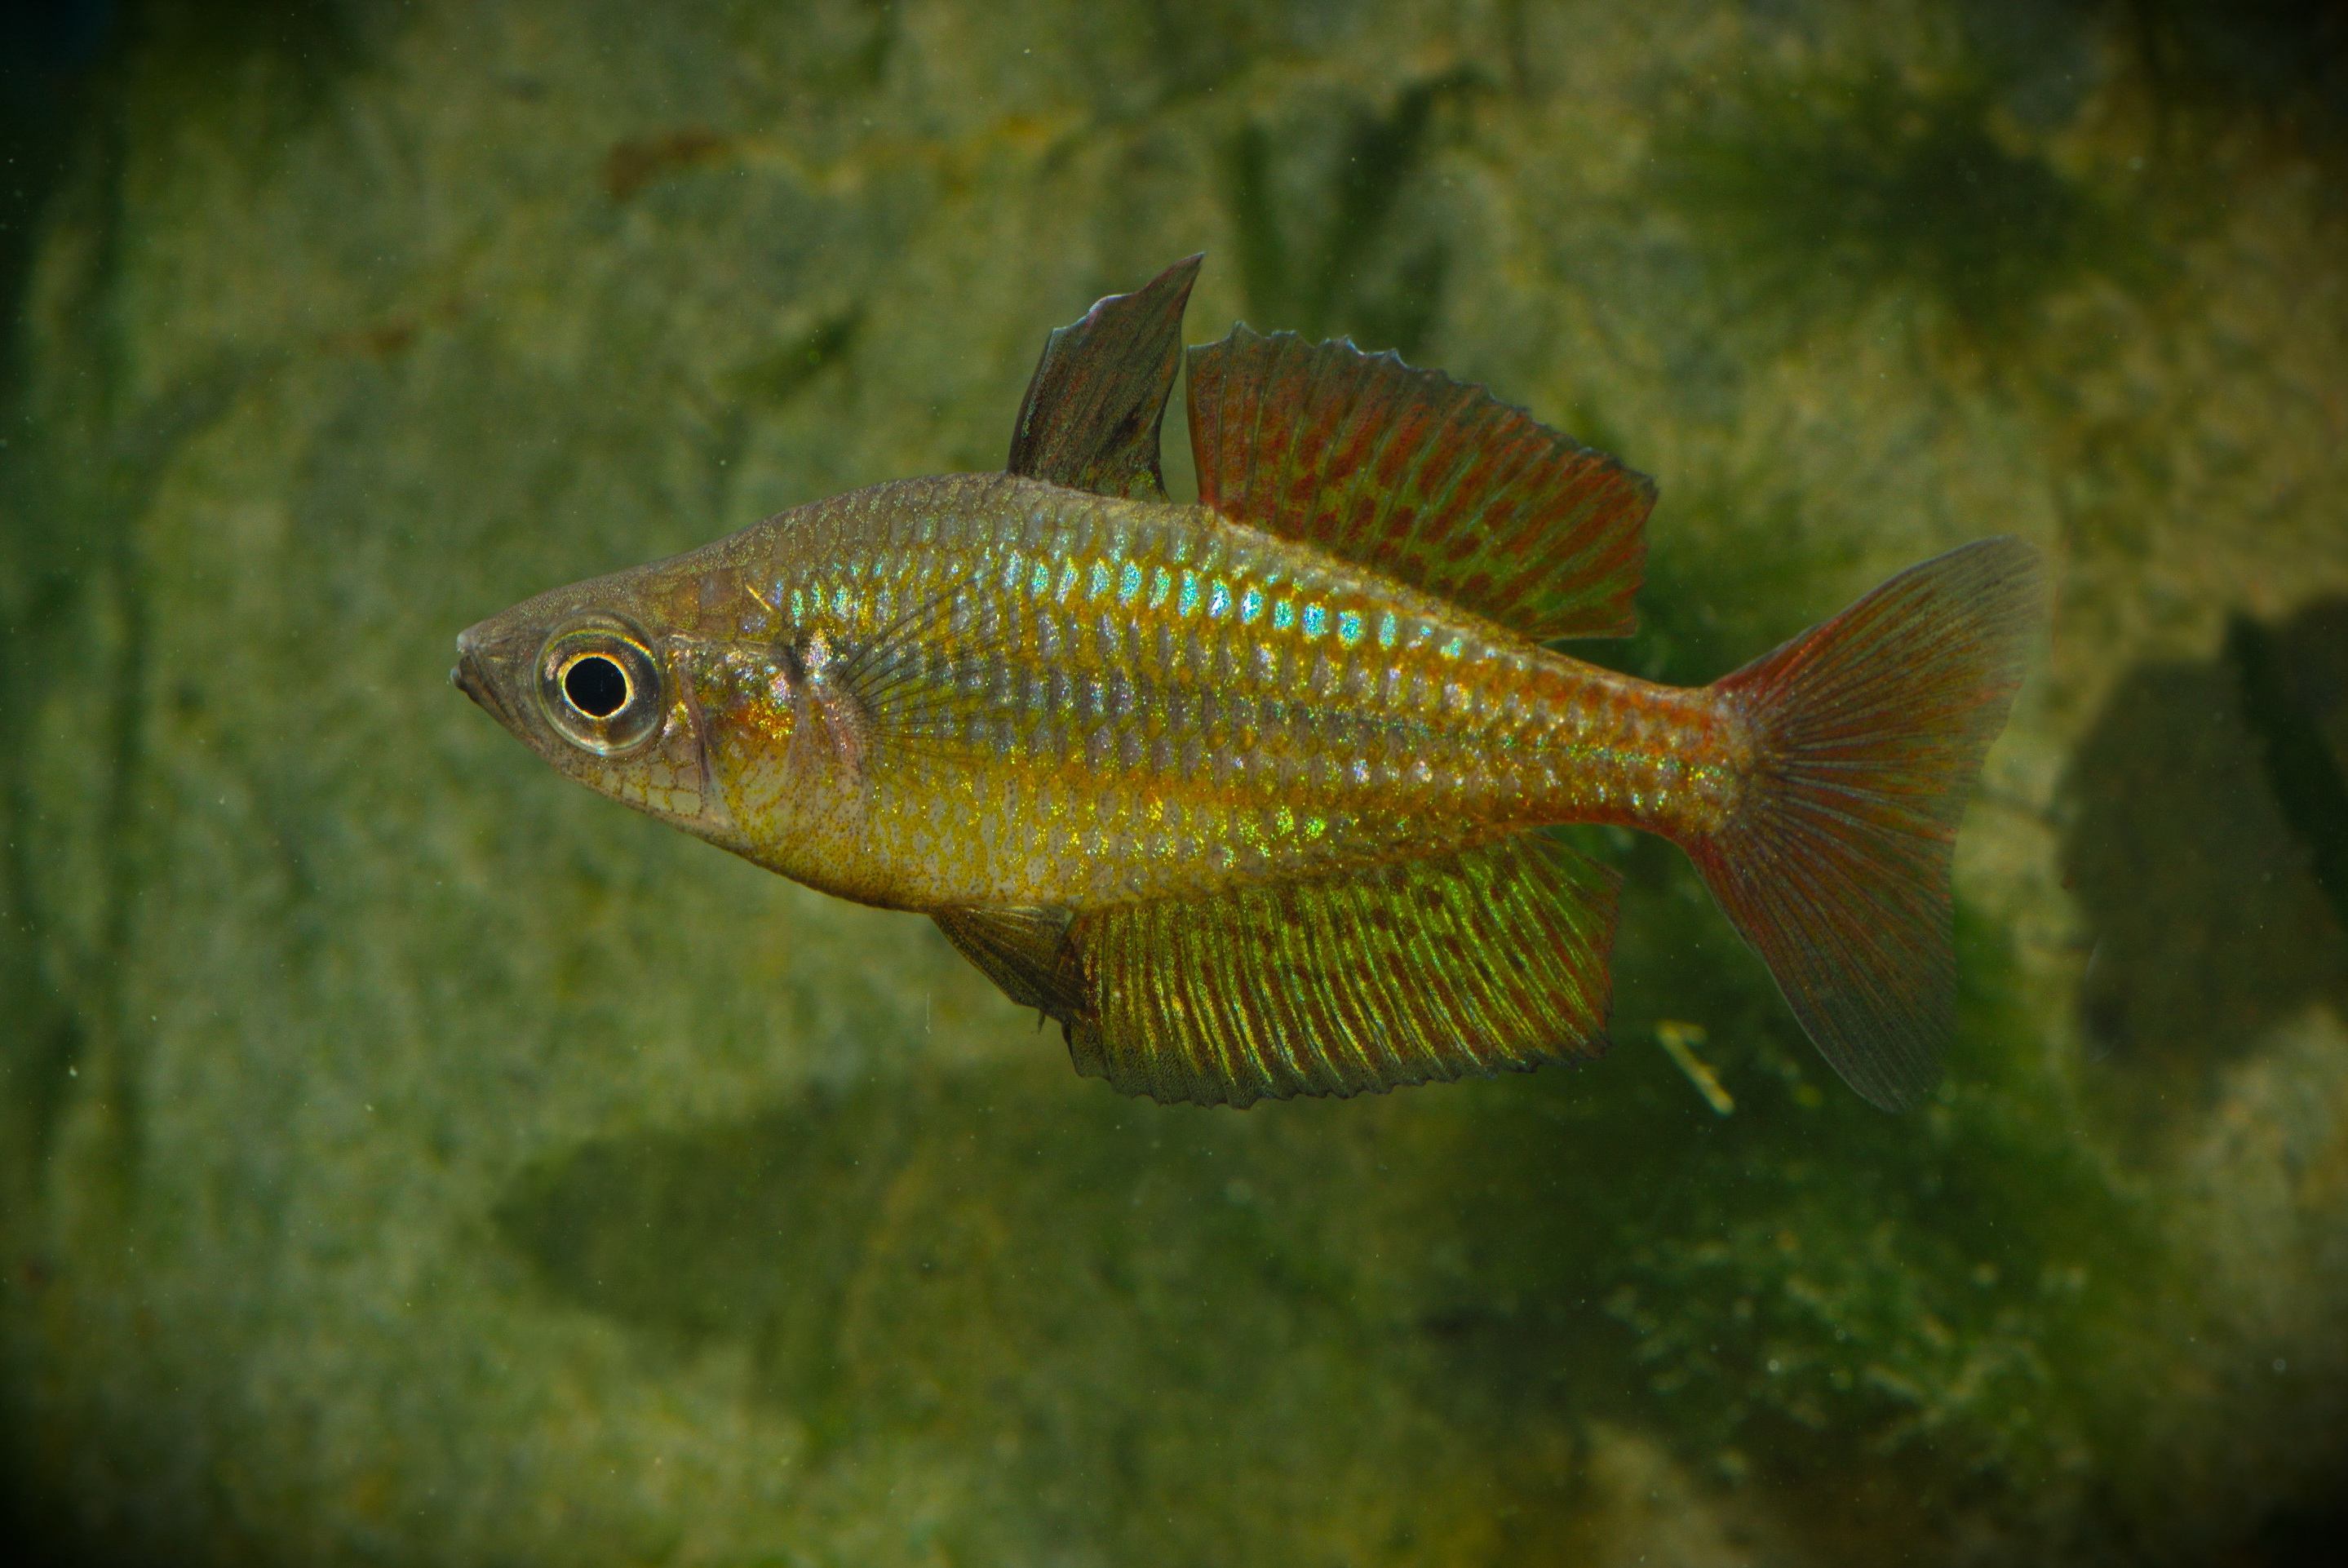 Rainbowfish from the Wet Tropics region of Australia (3). Credit: Keith Martin